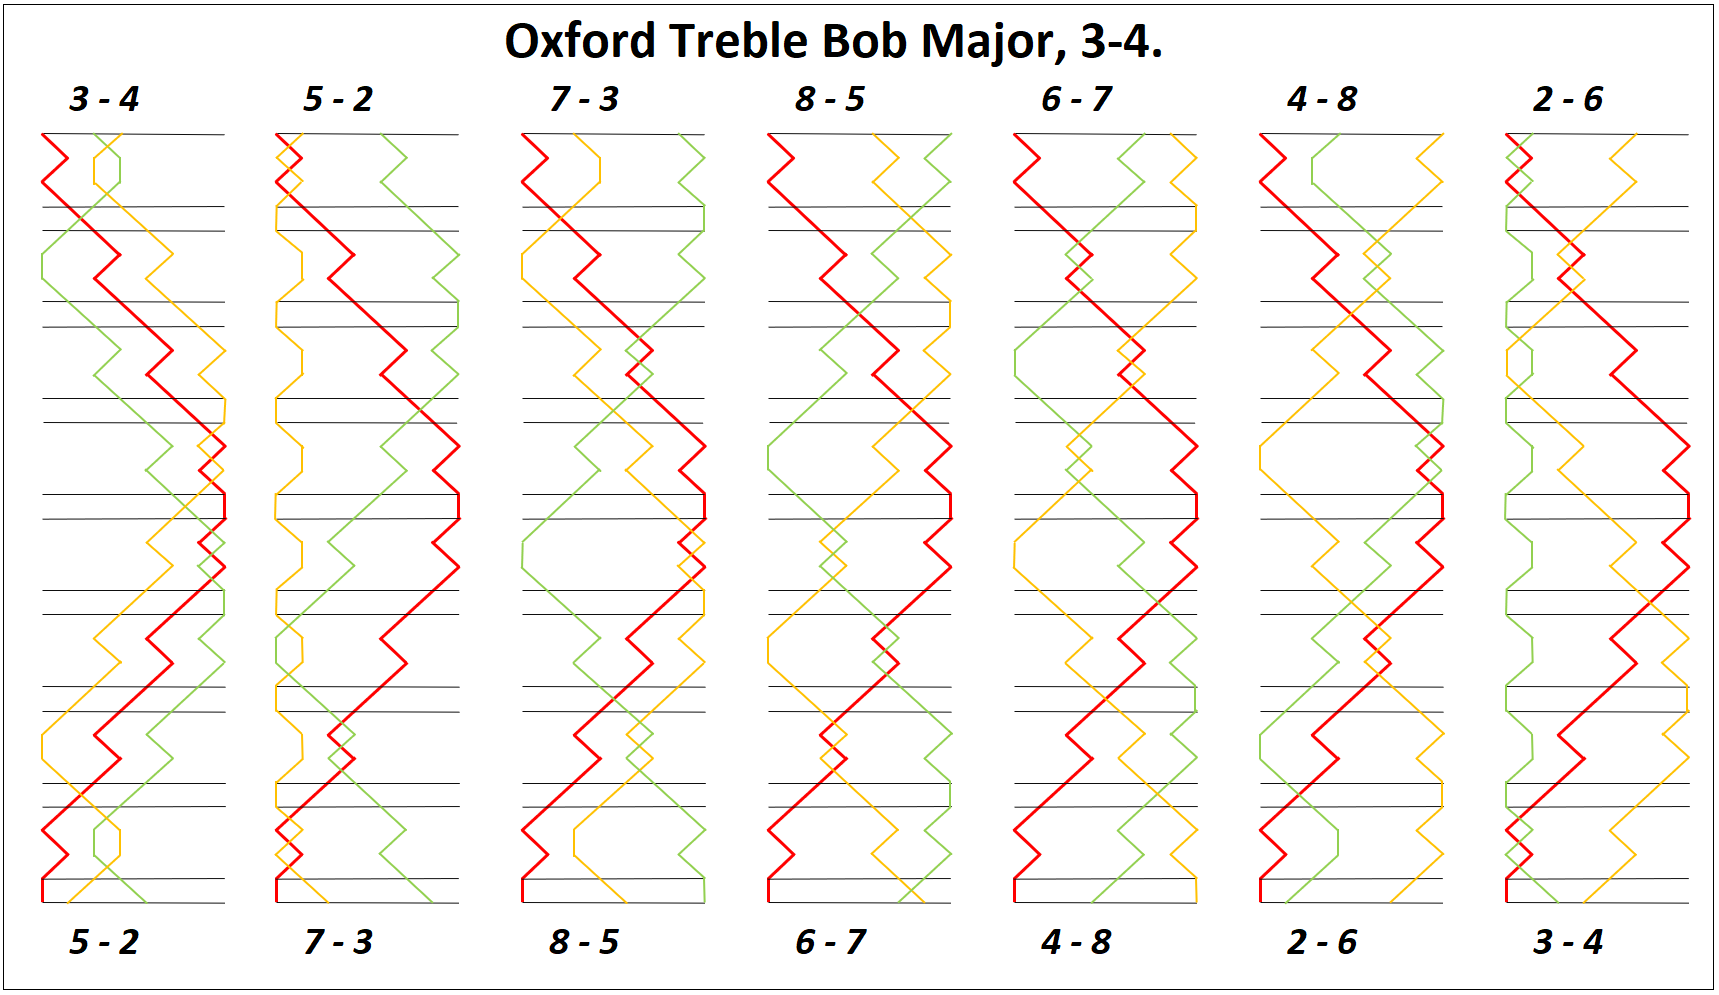 Oxford Treble Bob Major Double line for 3-4